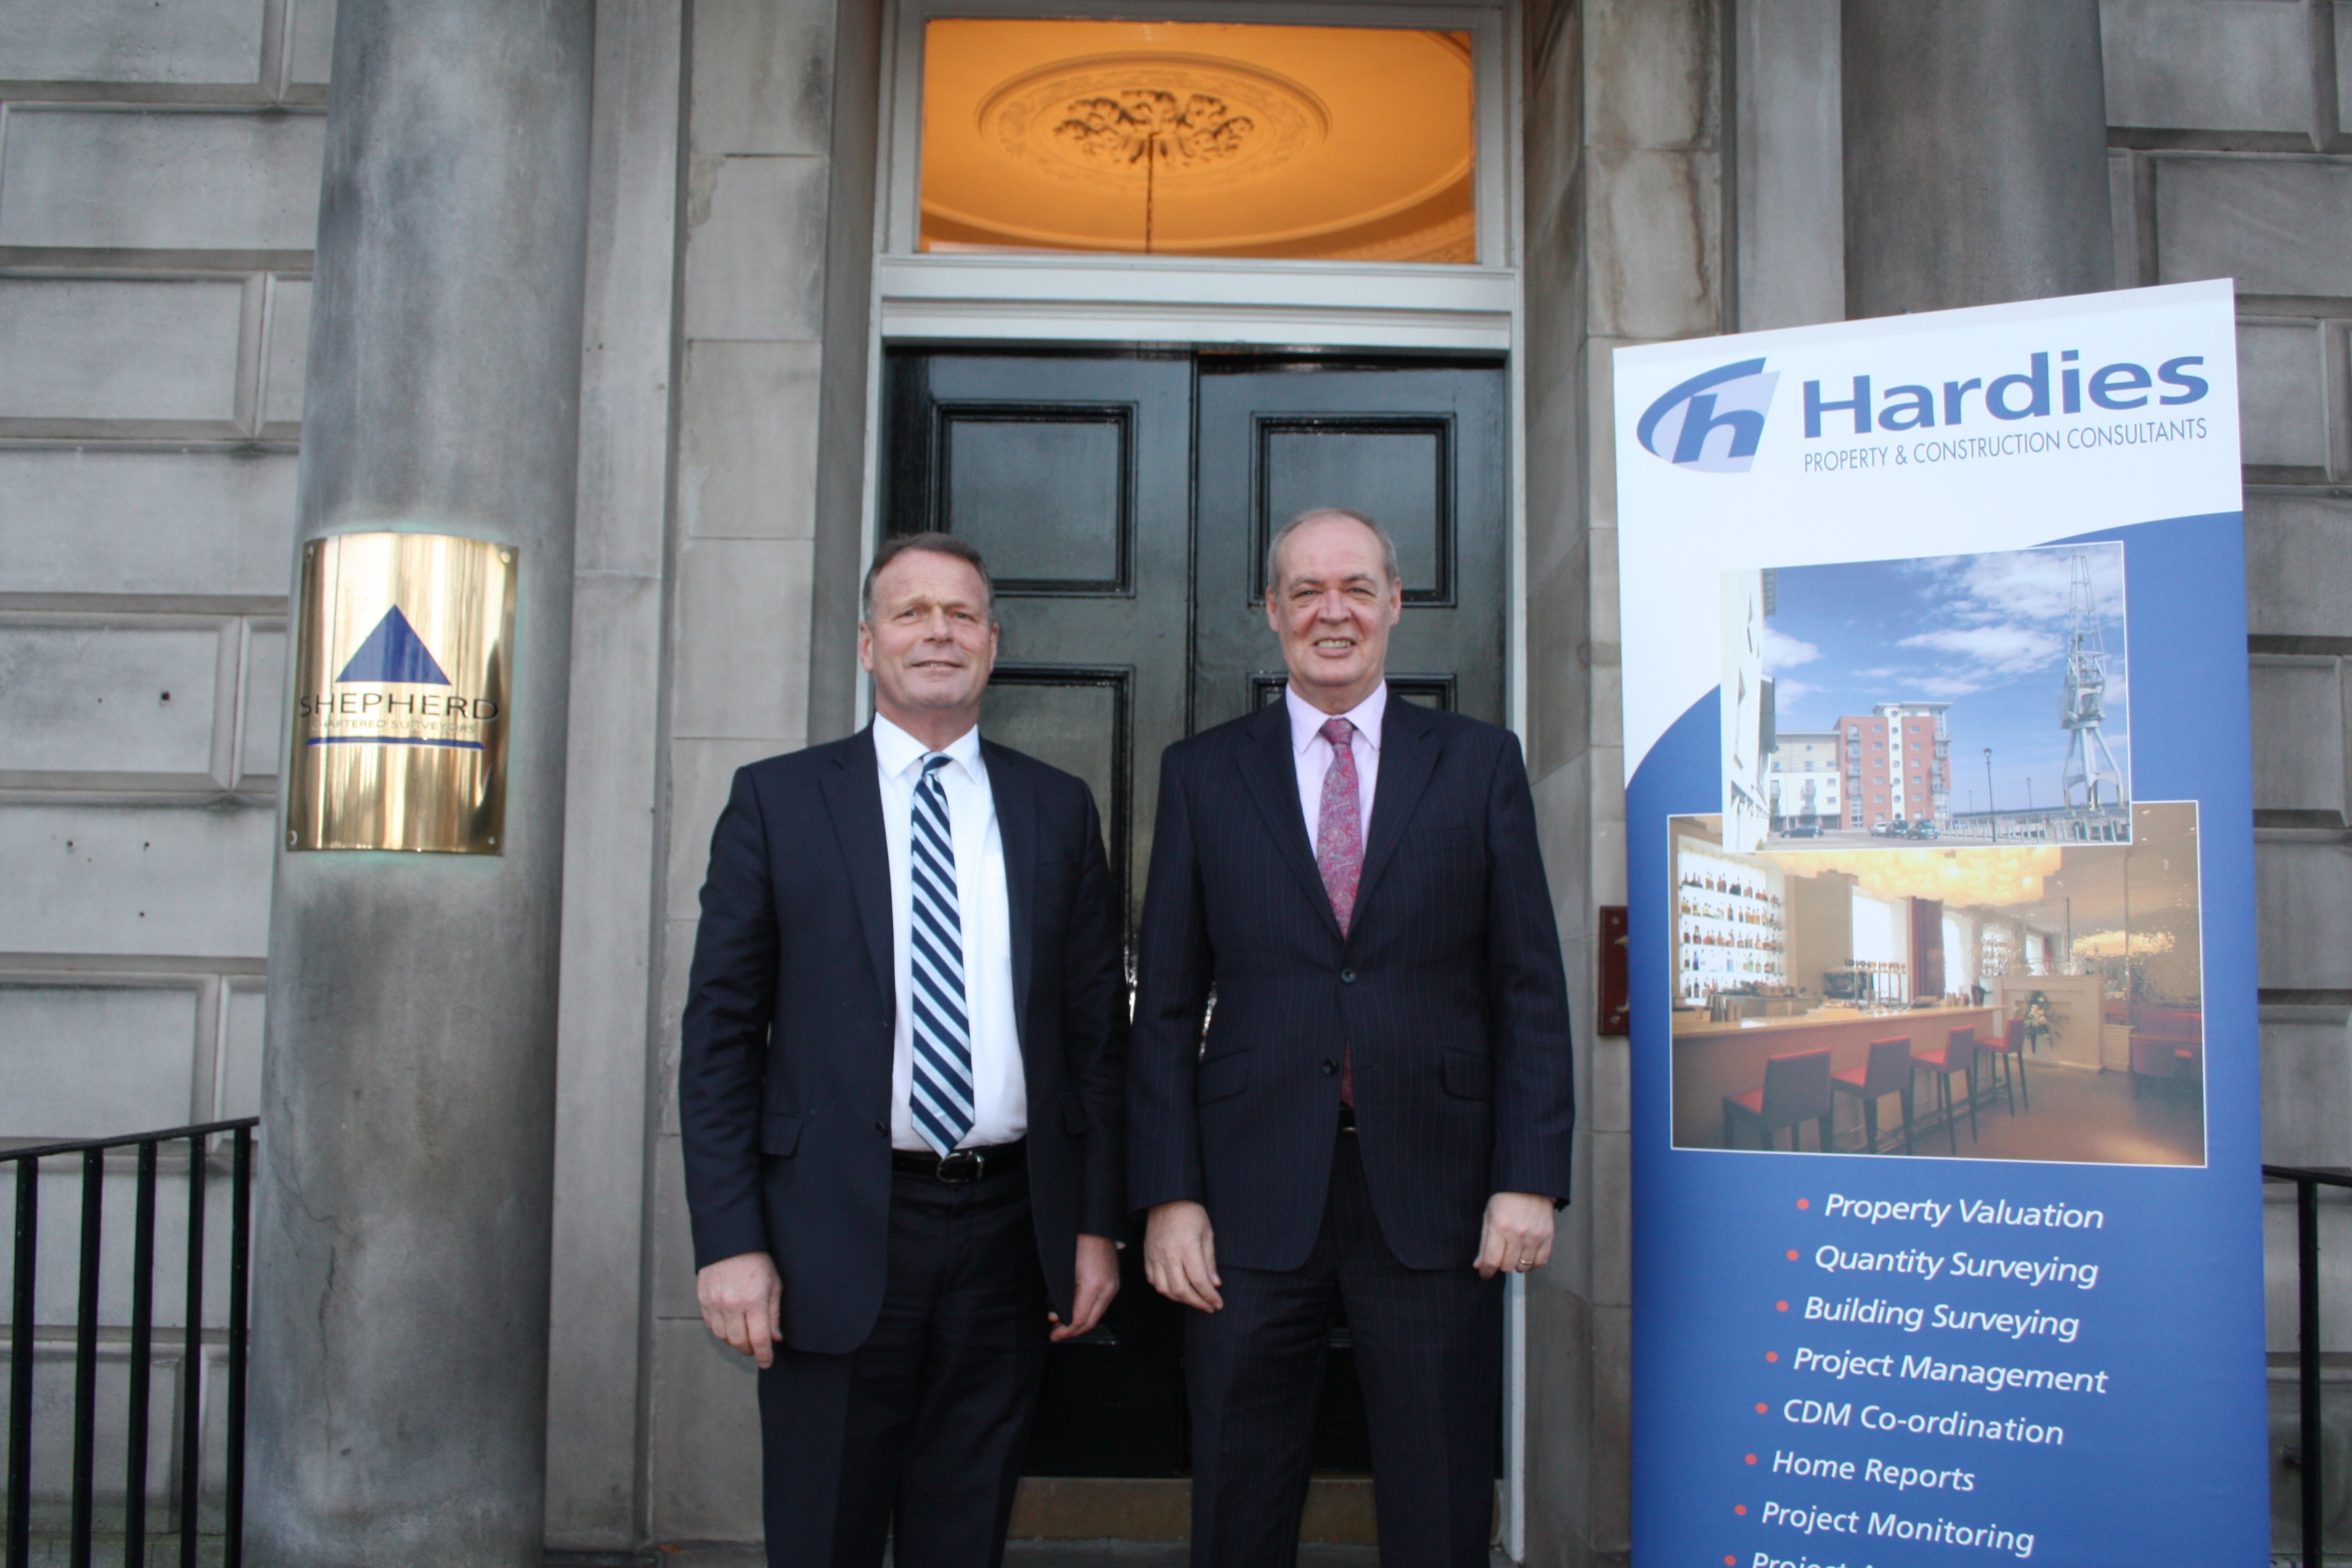 Shepherd Senior Partner George Brewster (left) and Derek Ferrier, Managing Partner of Hardies.